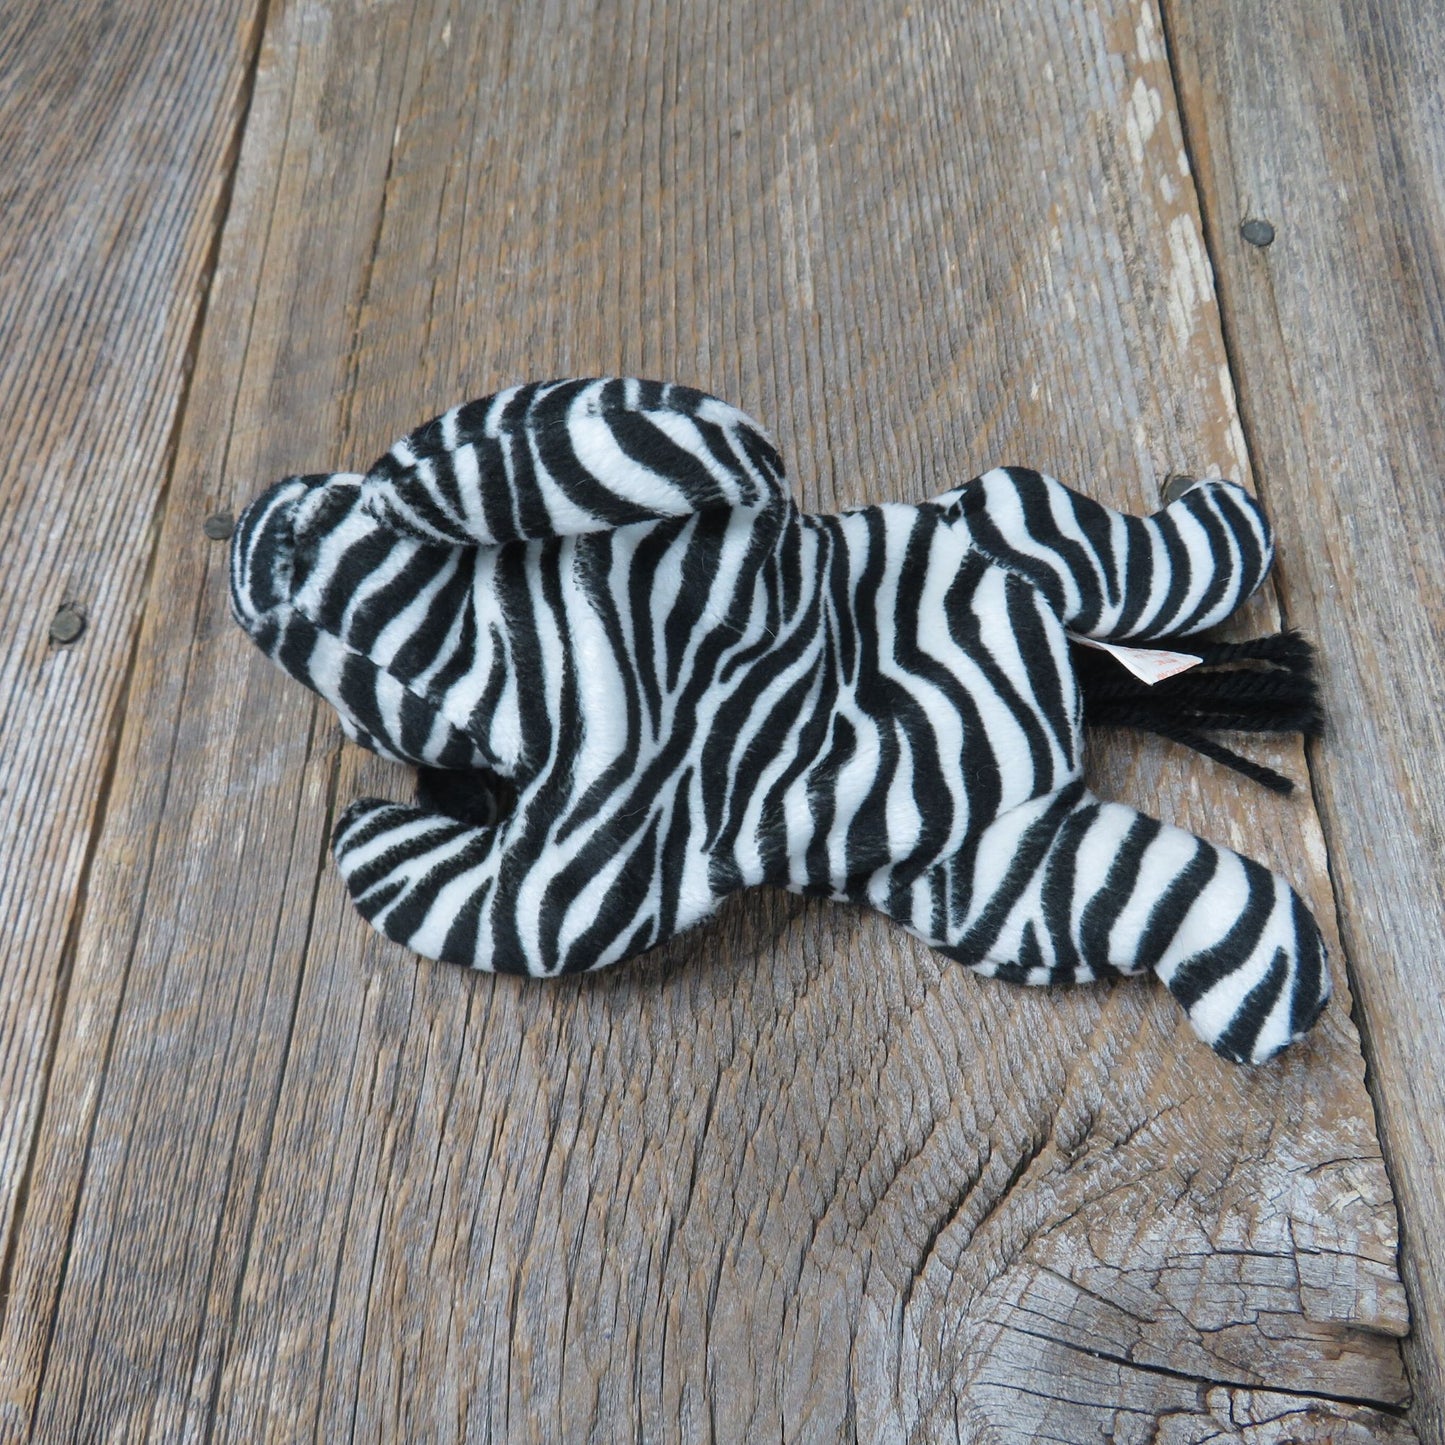 Zebra Plush Beanie Baby Ziggy Ty Bean Bag Stuffed Animal Black and White 1995